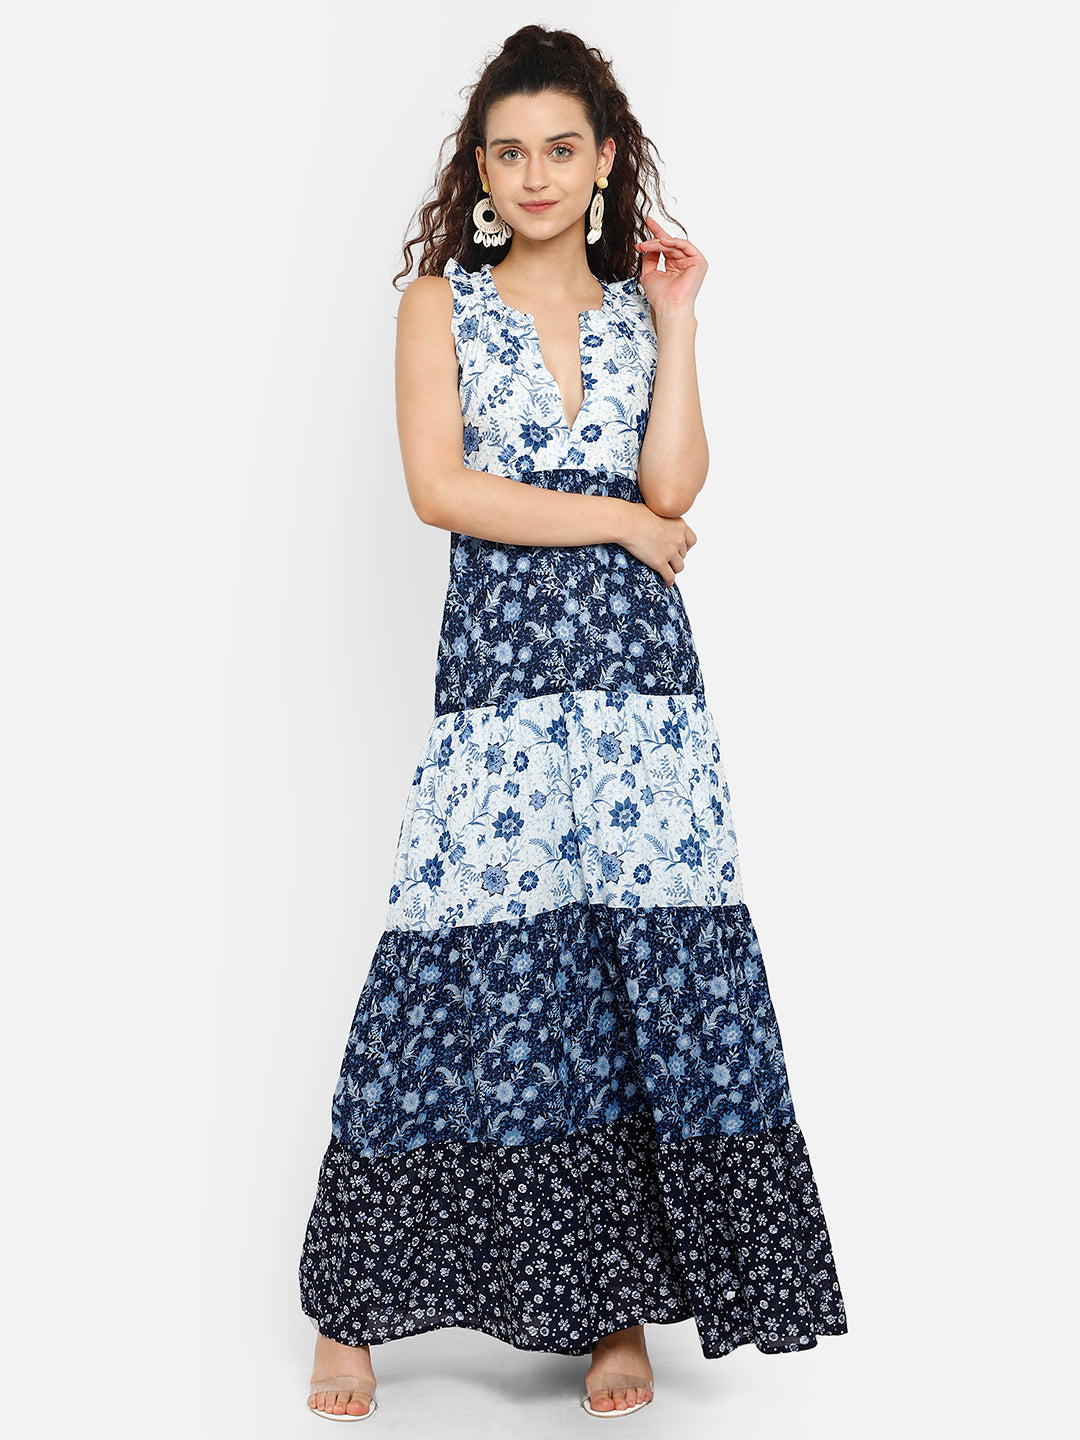 White and blue floral print maxi dress - Aditi Wasan